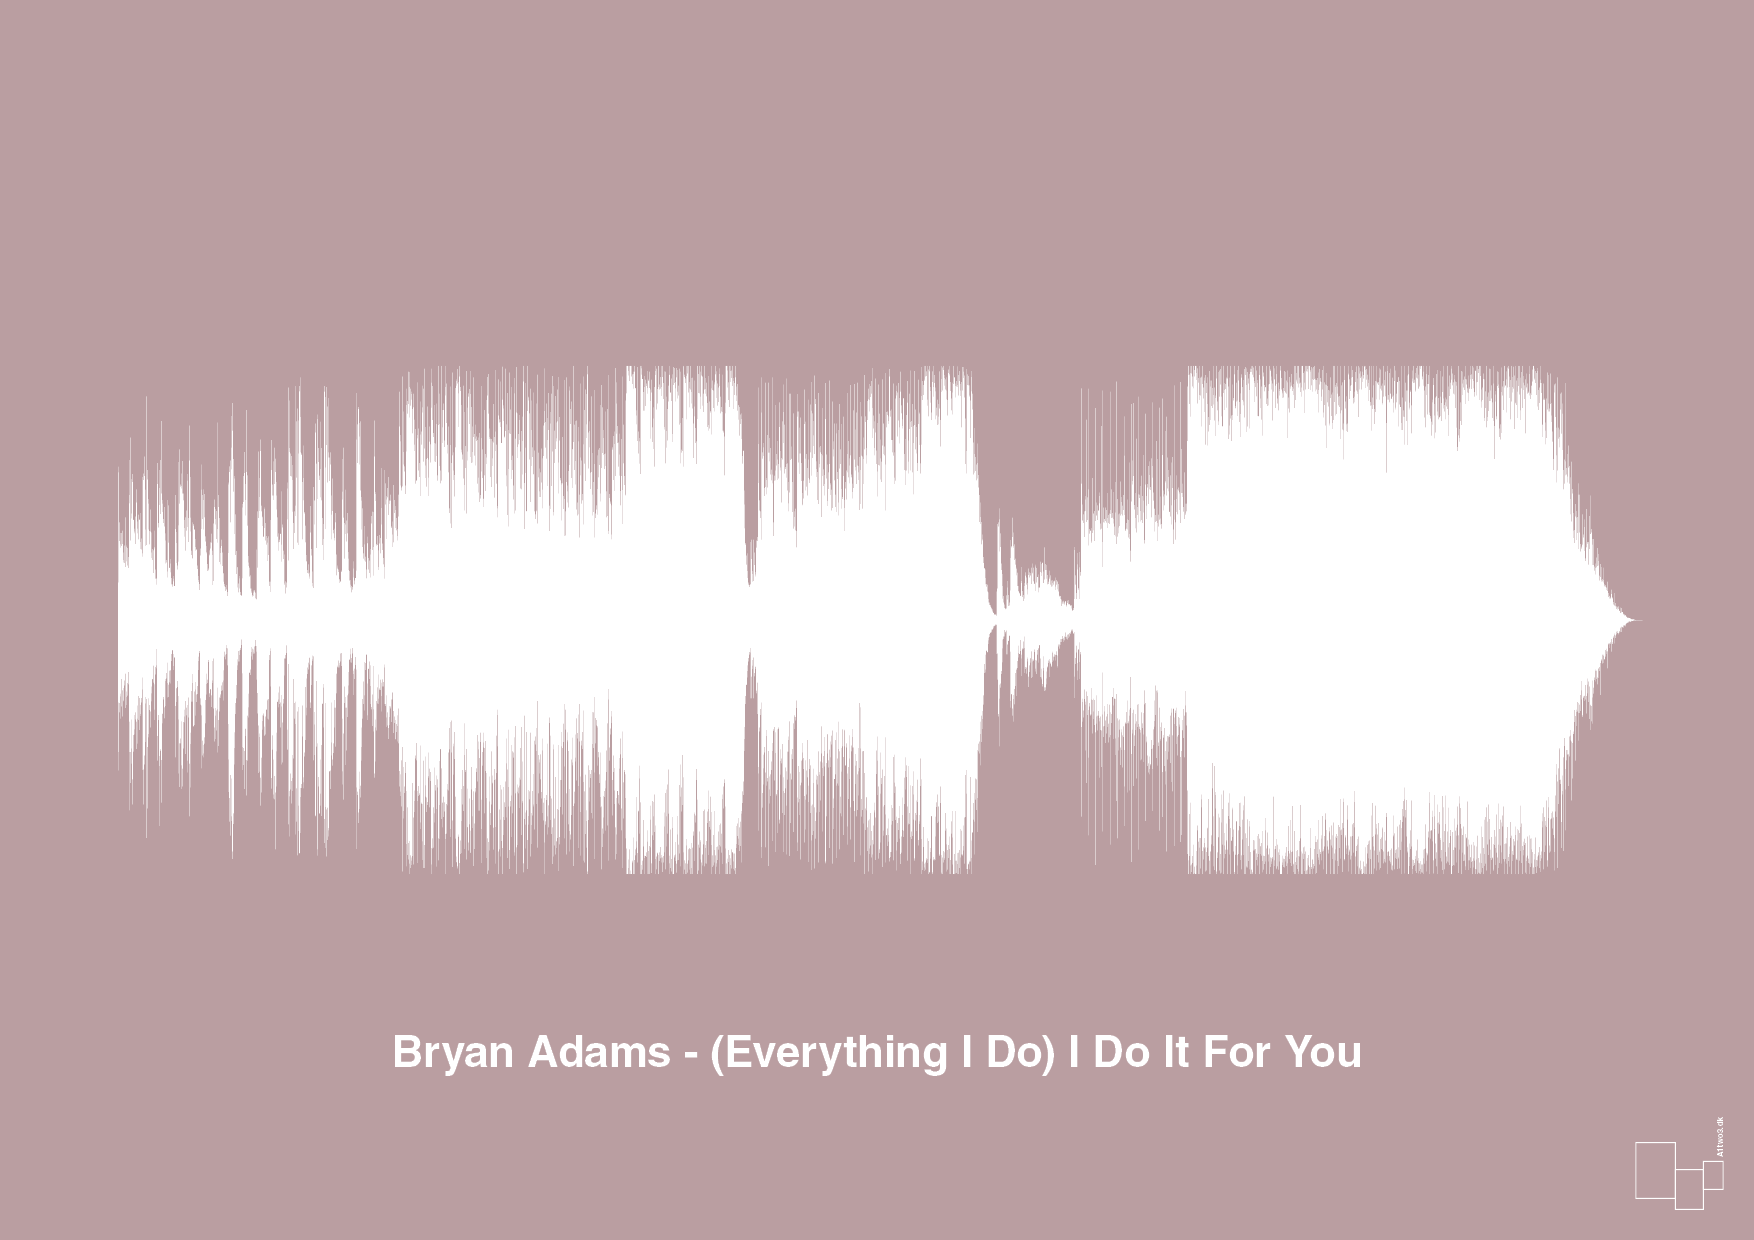 bryan adams - (everything i do) i do it for you - Plakat med Musik i Light Rose